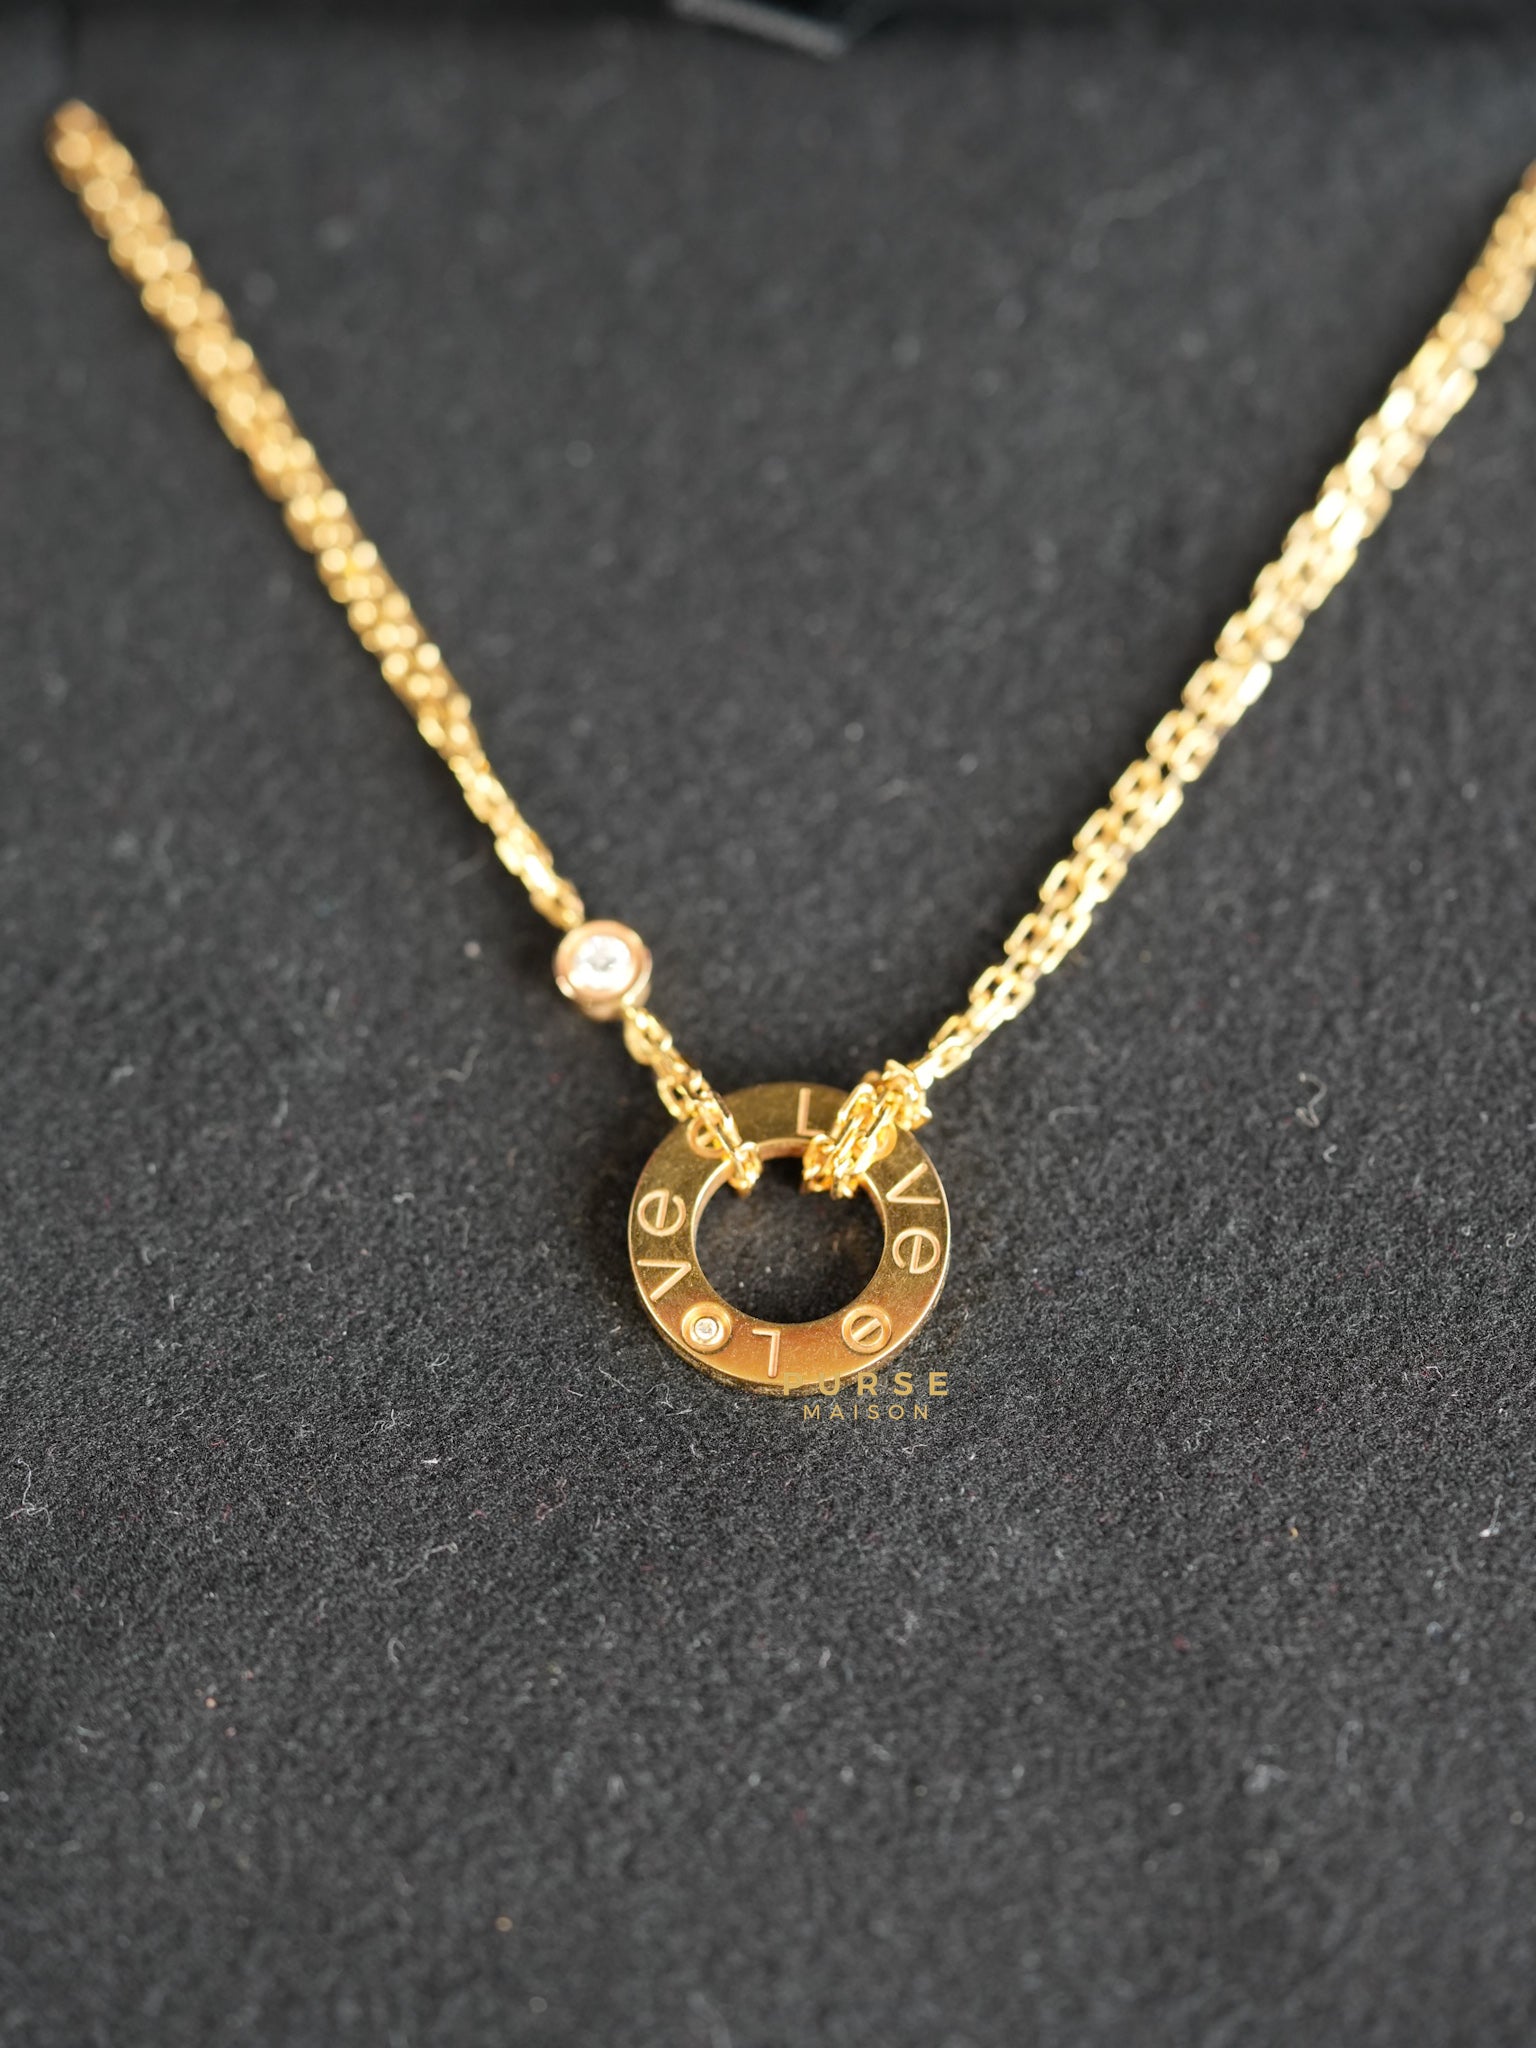 Love Mini Circle 18k Red Gold 0.03 ct Necklace | Purse Maison Luxury Bags Shop